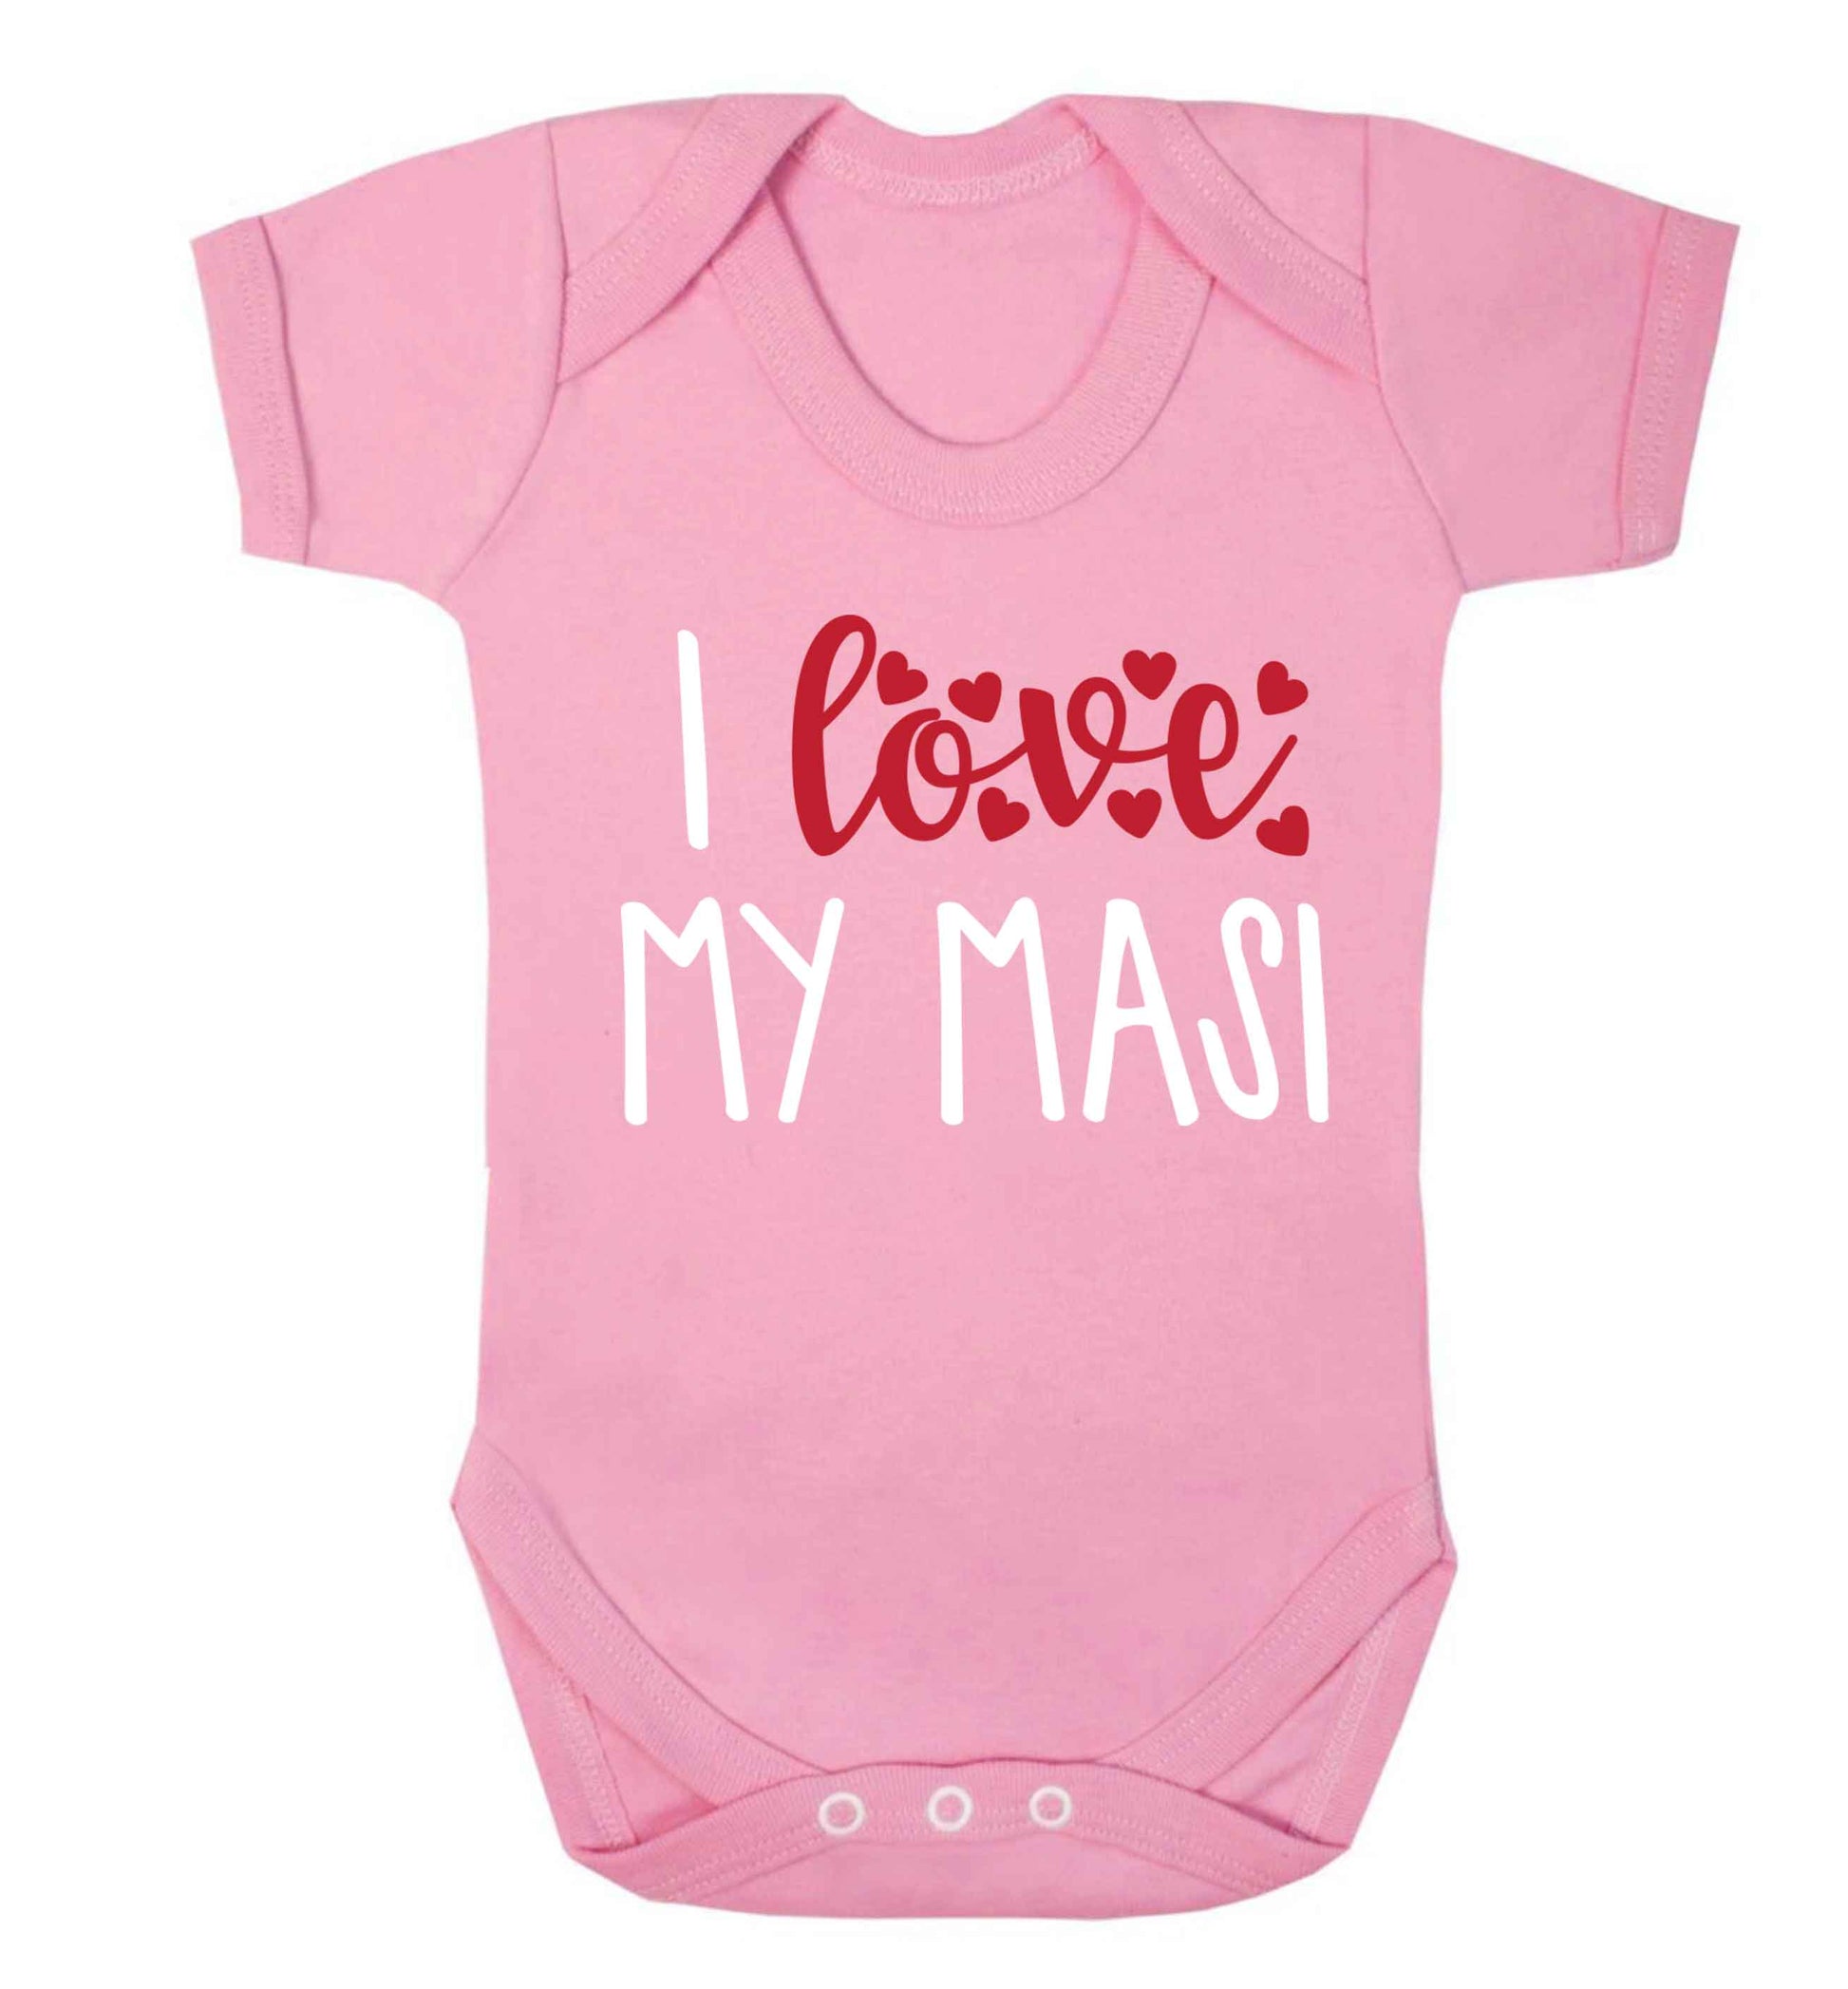 I love my masi Baby Vest pale pink 18-24 months